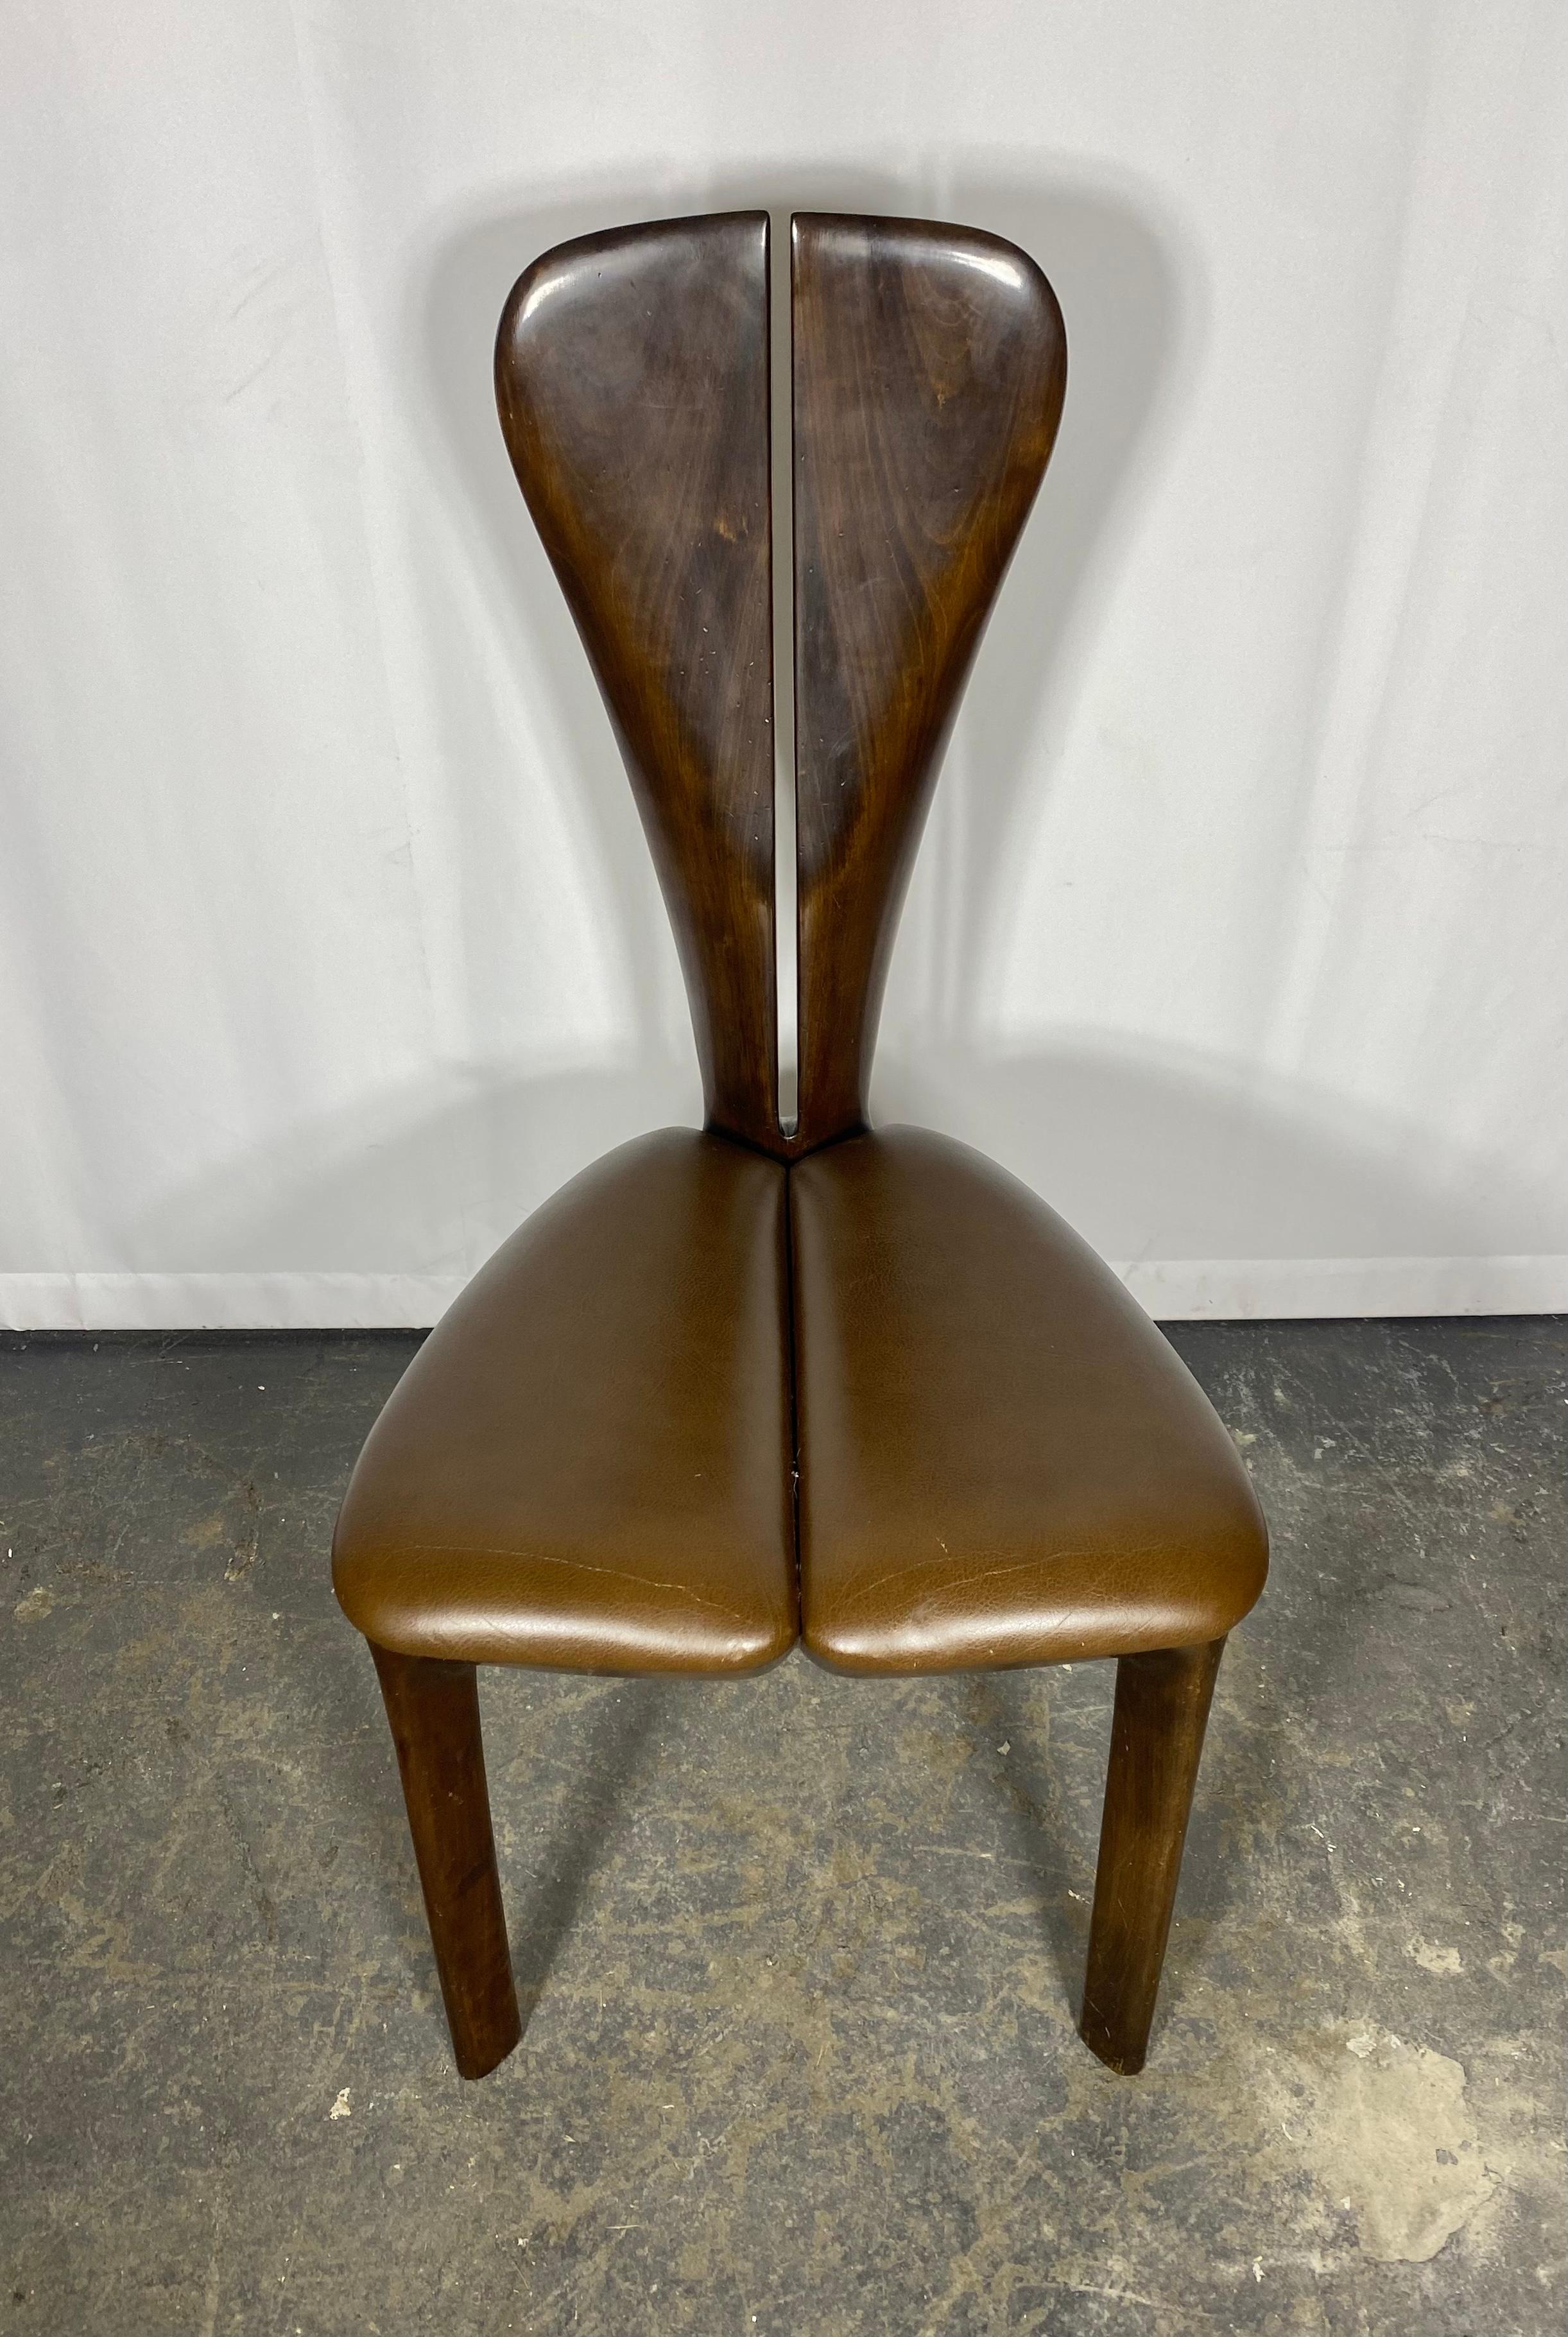 Unusual post modernist sculpted wood side/ desk chair by Edward Axel Roffman.. Organic sculptural design..